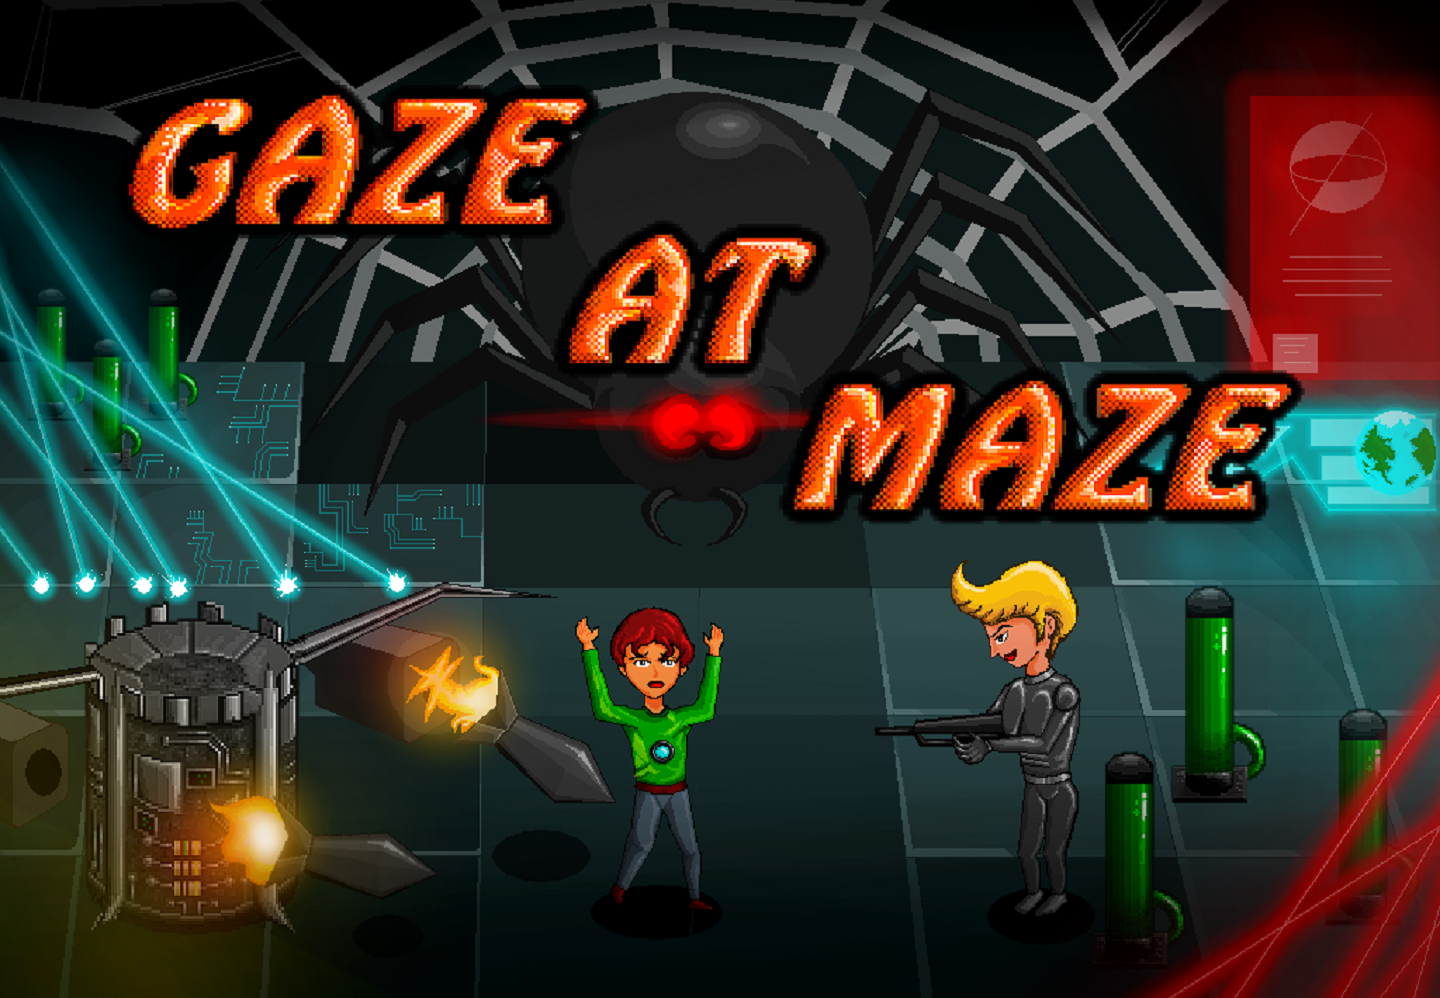 Gaze At Maze Steam CD Key